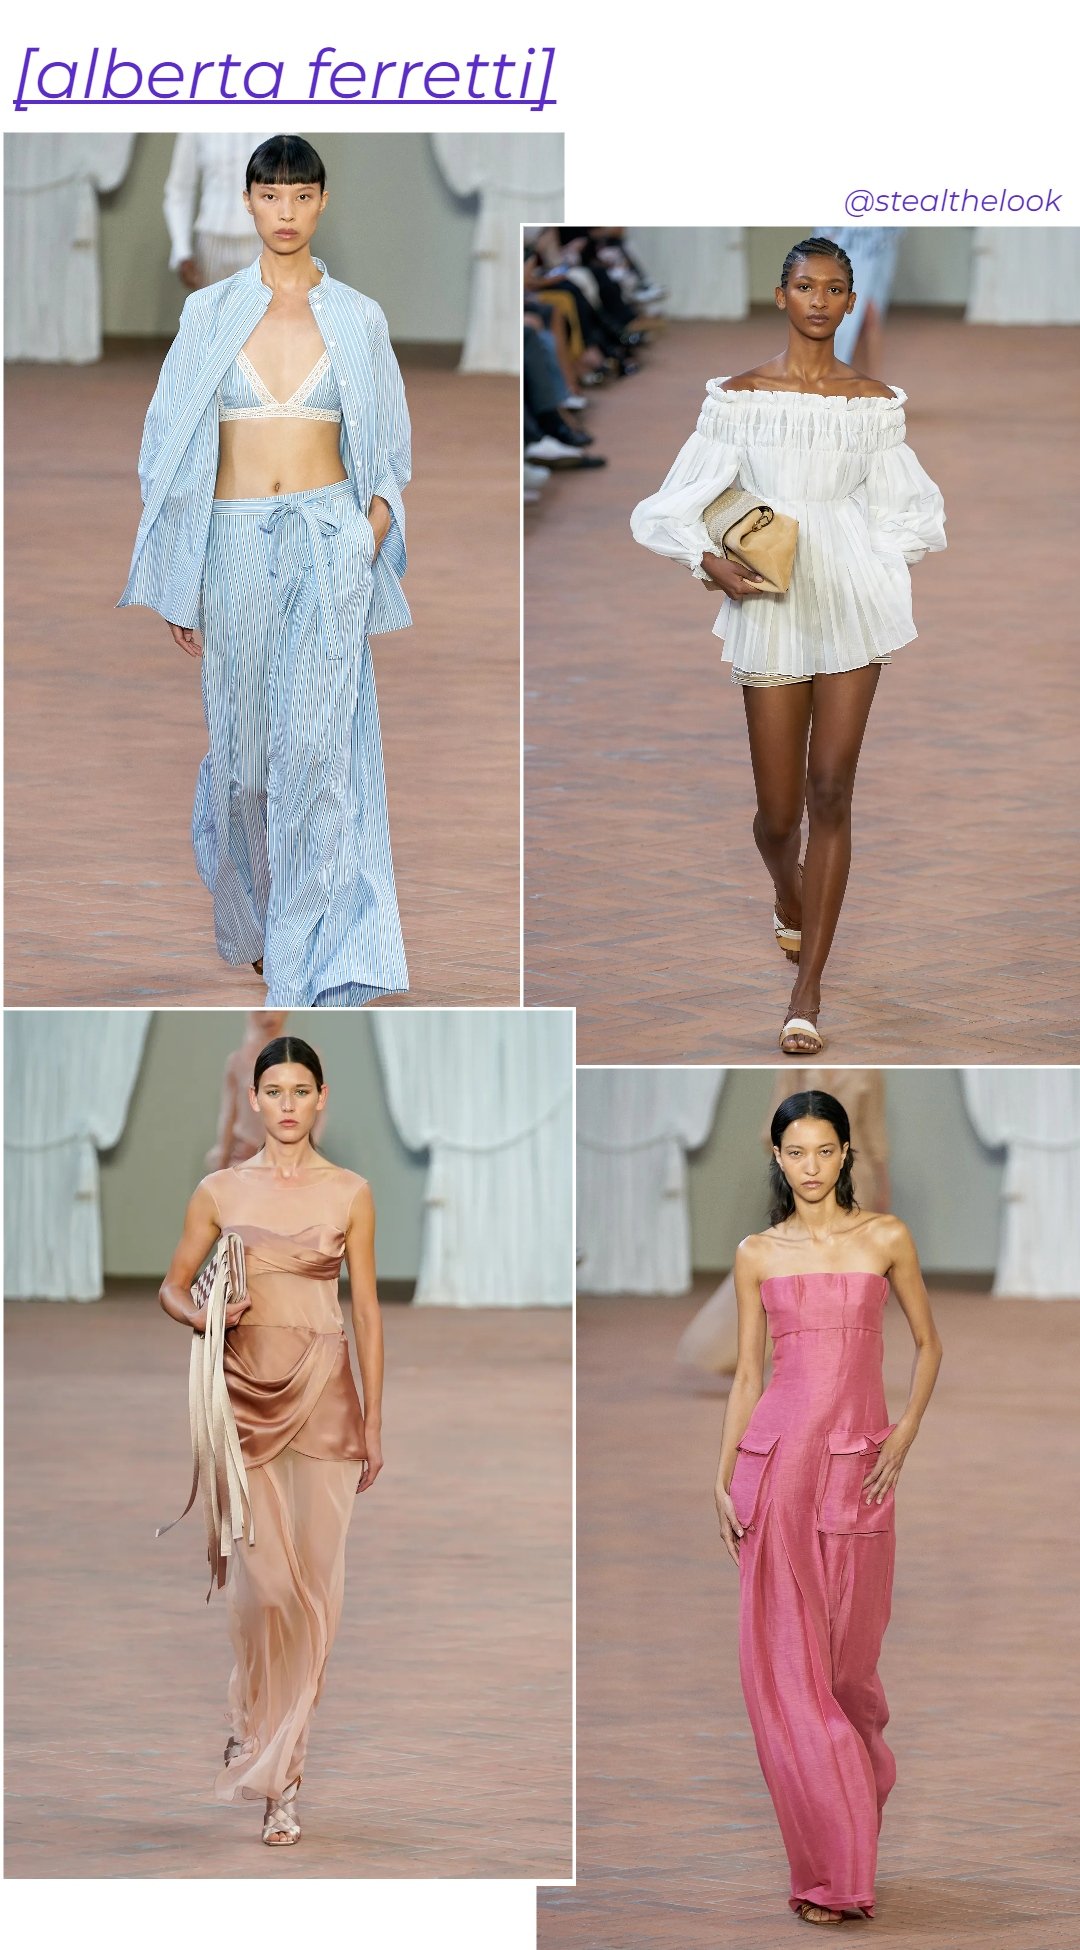 Alberta Ferretti - roupas diversas - Milano Fashion Week - primavera - colagem de imagens - https://stealthelook.com.br